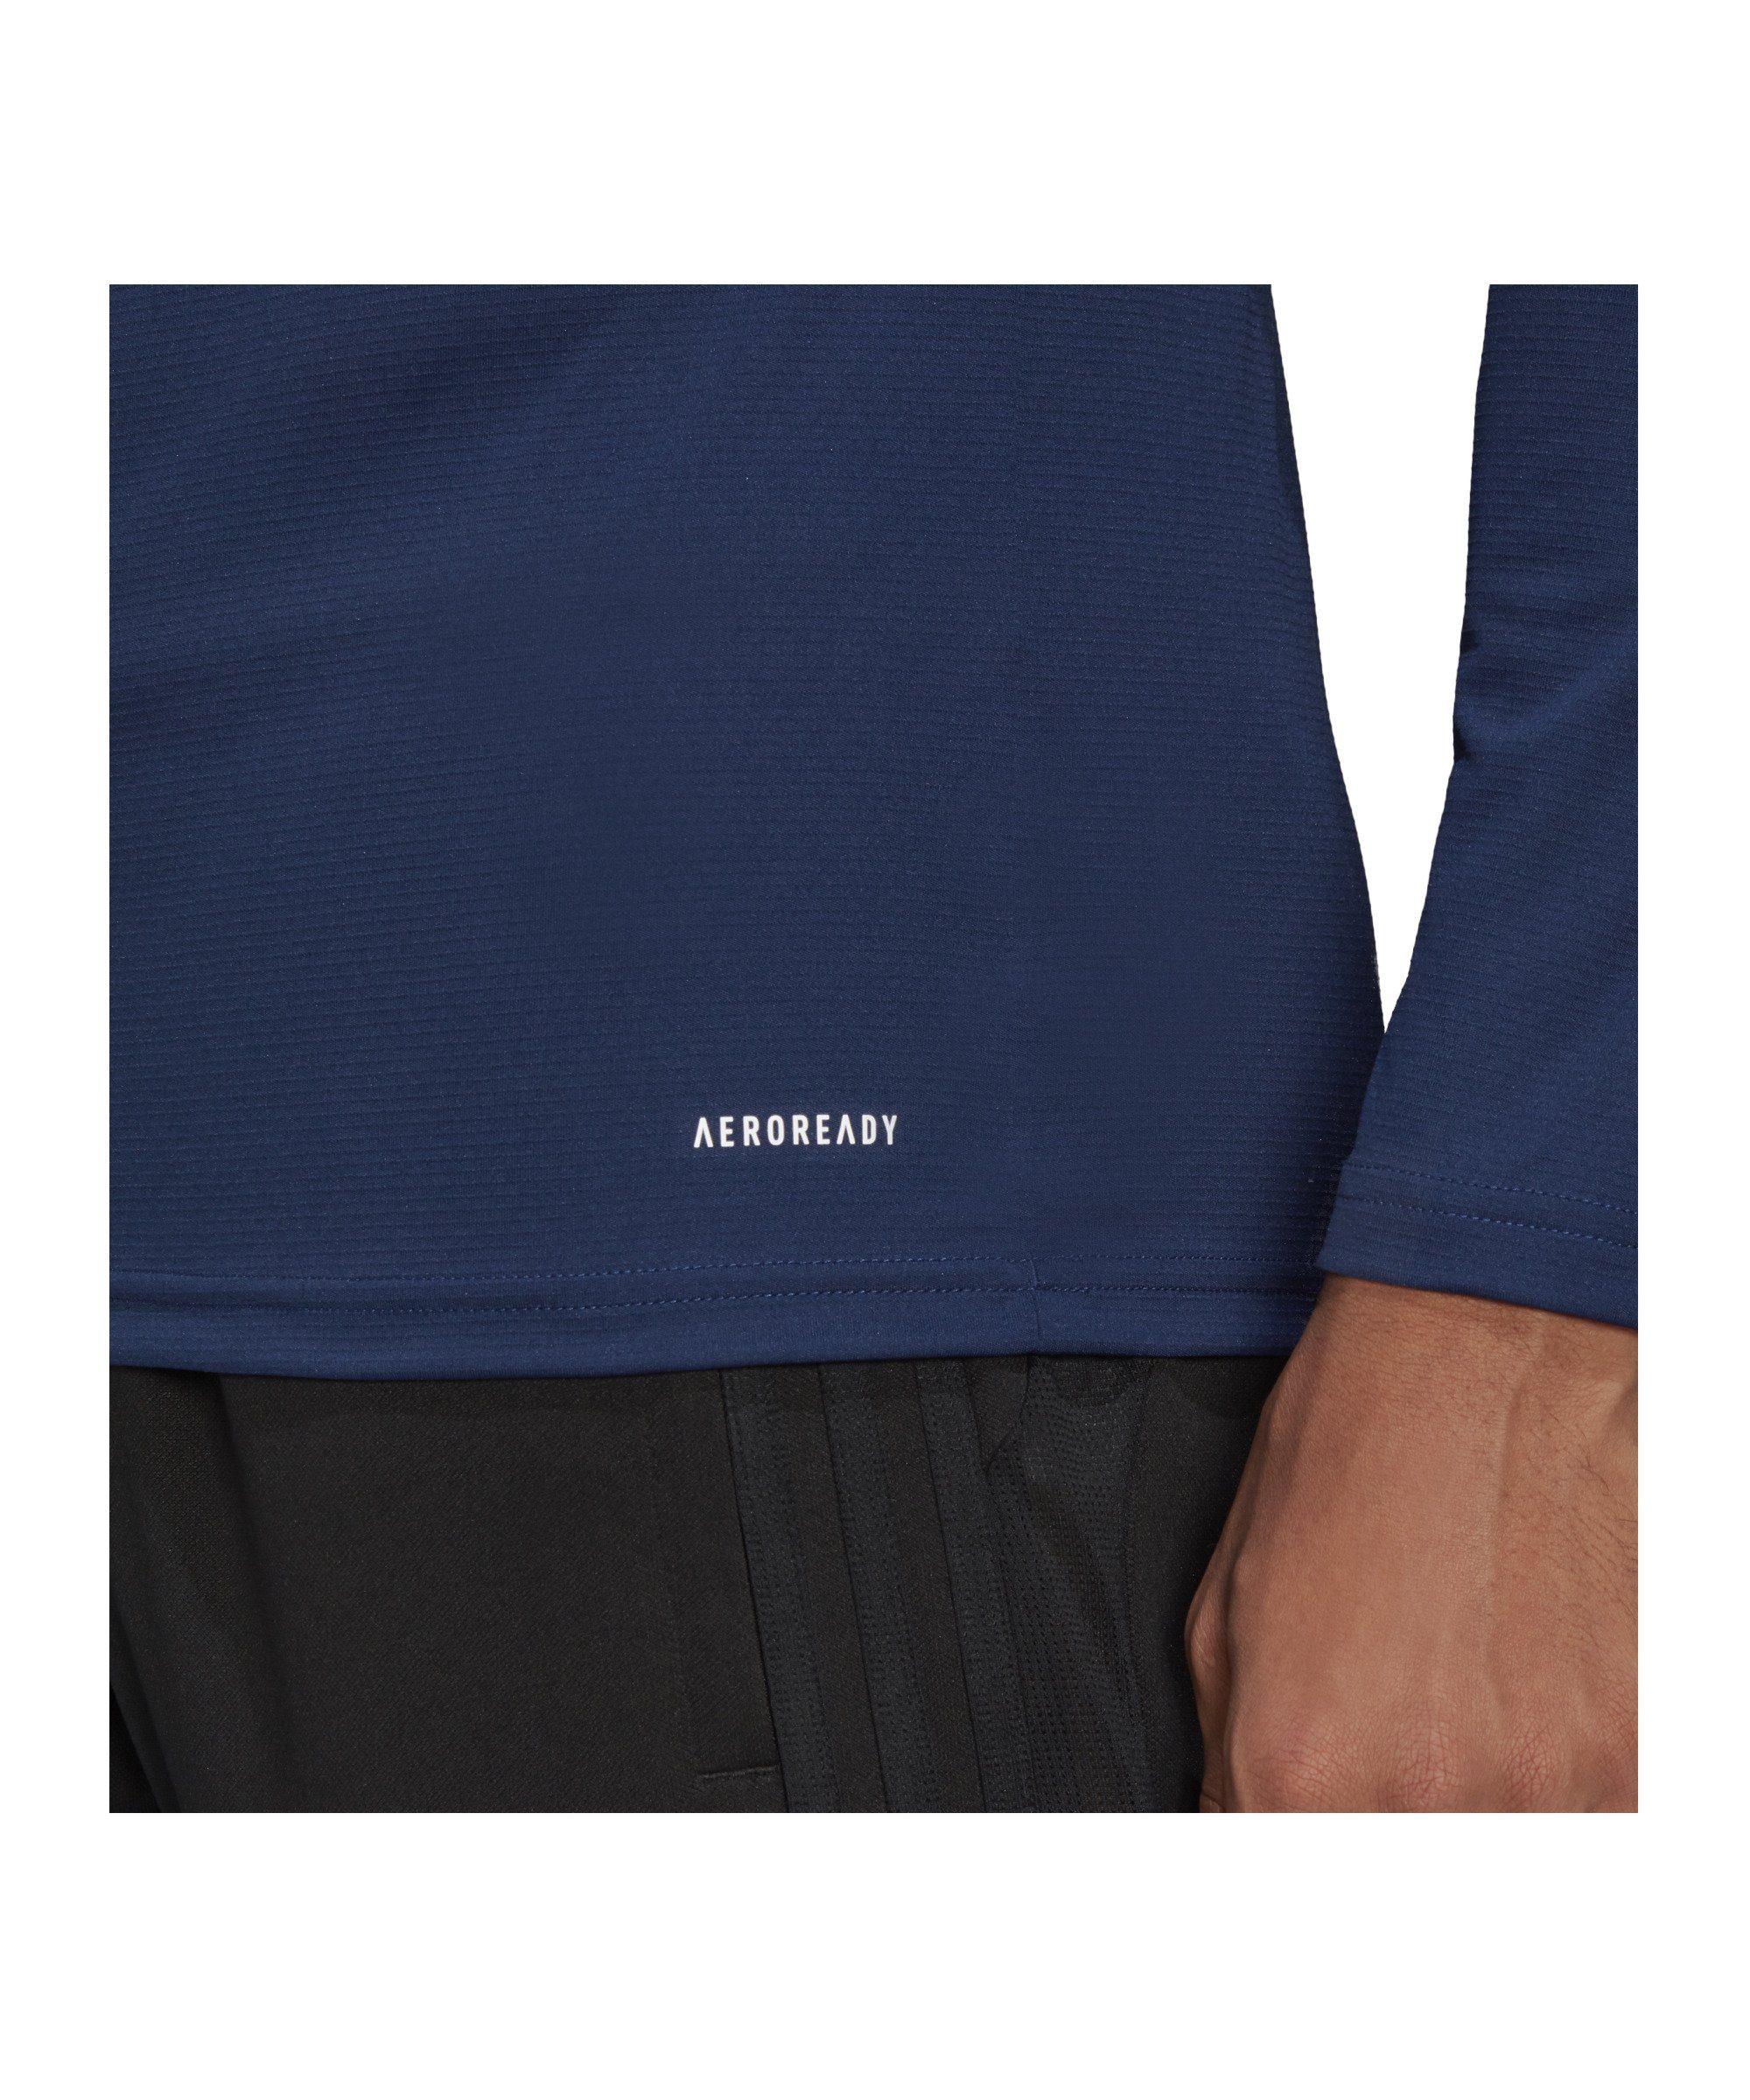 adidas Performance Funktionsshirt Team Base Nachhaltiges blau Produkt langarm Top